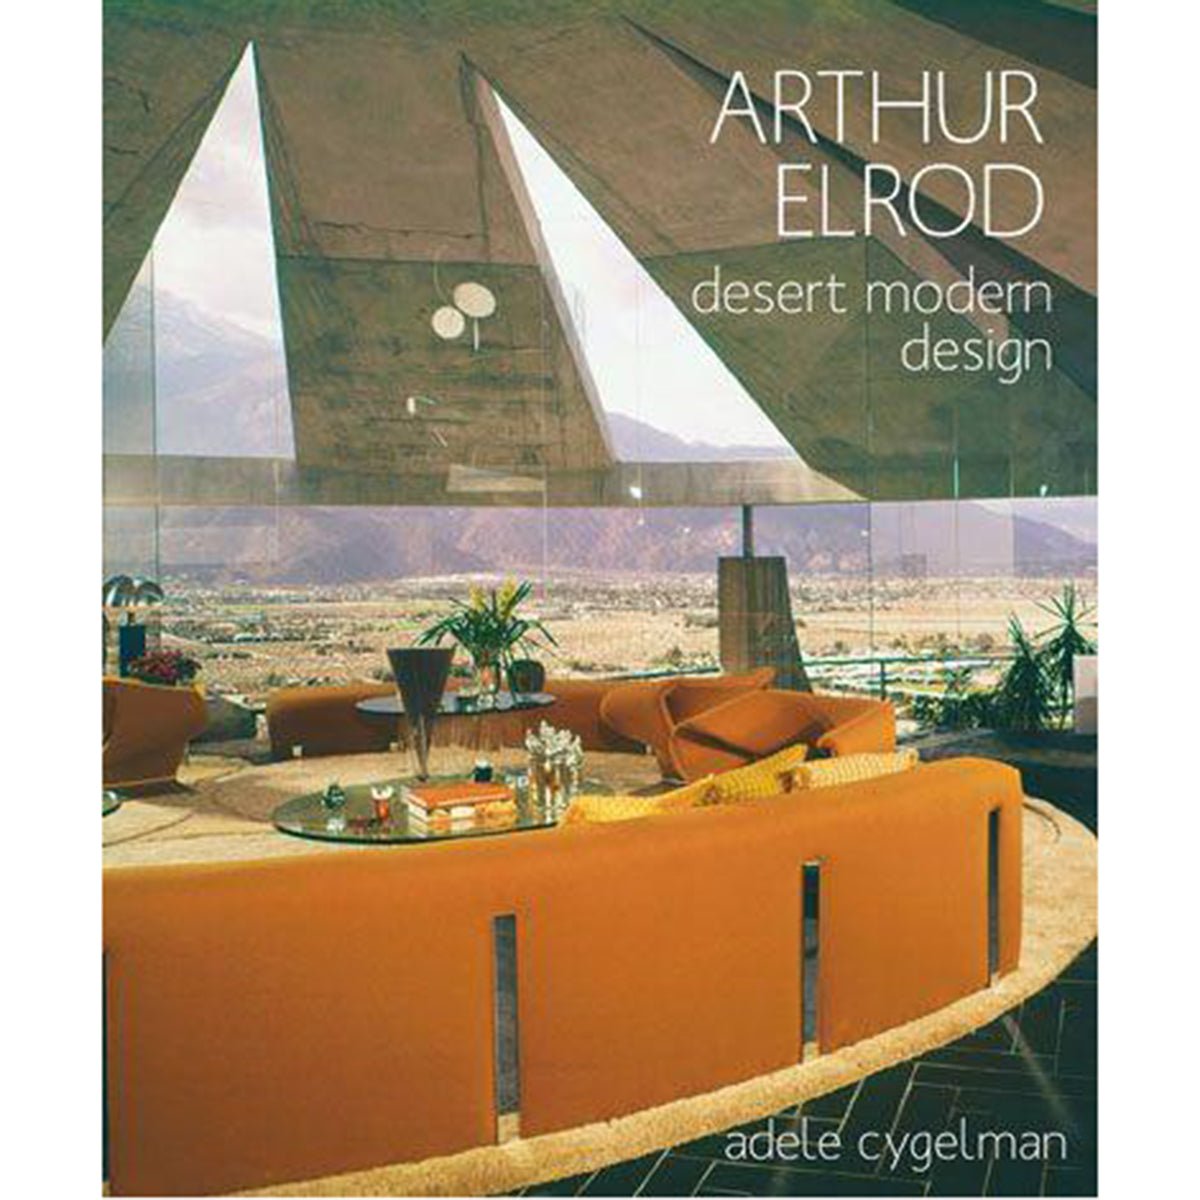 Arthur Elrod: Desert Modern Design by Adele Cygelman - Destination PSP